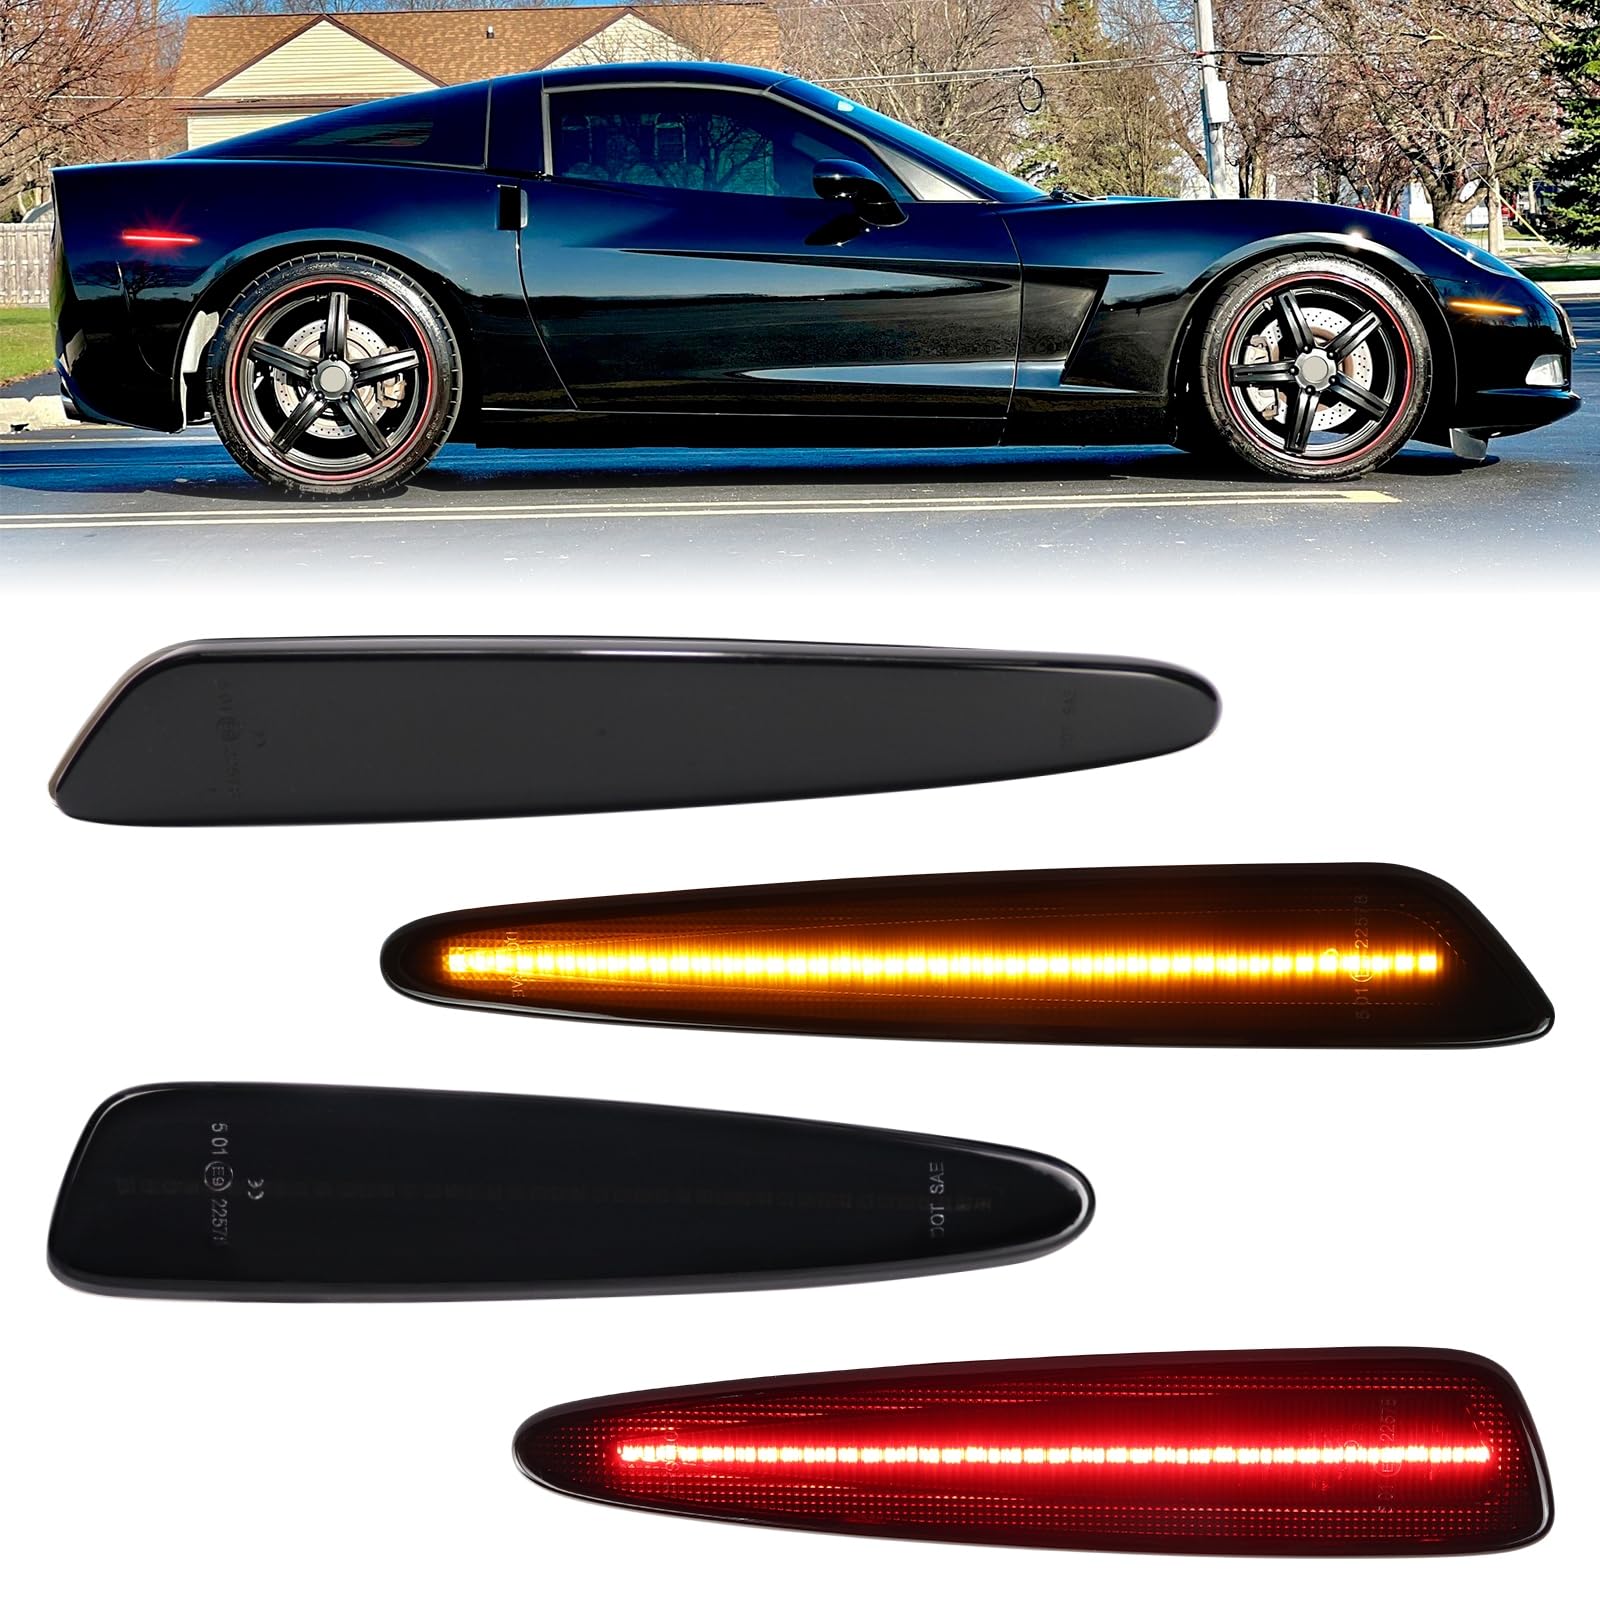 FetonAuto LED Seitenmarkierungsleuchten Kits kompatibel mit 2005-2013 Chevy C6 Corvette, geräucherte Linse Stoßstange Seitenmarkierungsleuchten Montage Ersatz von FetonAuto